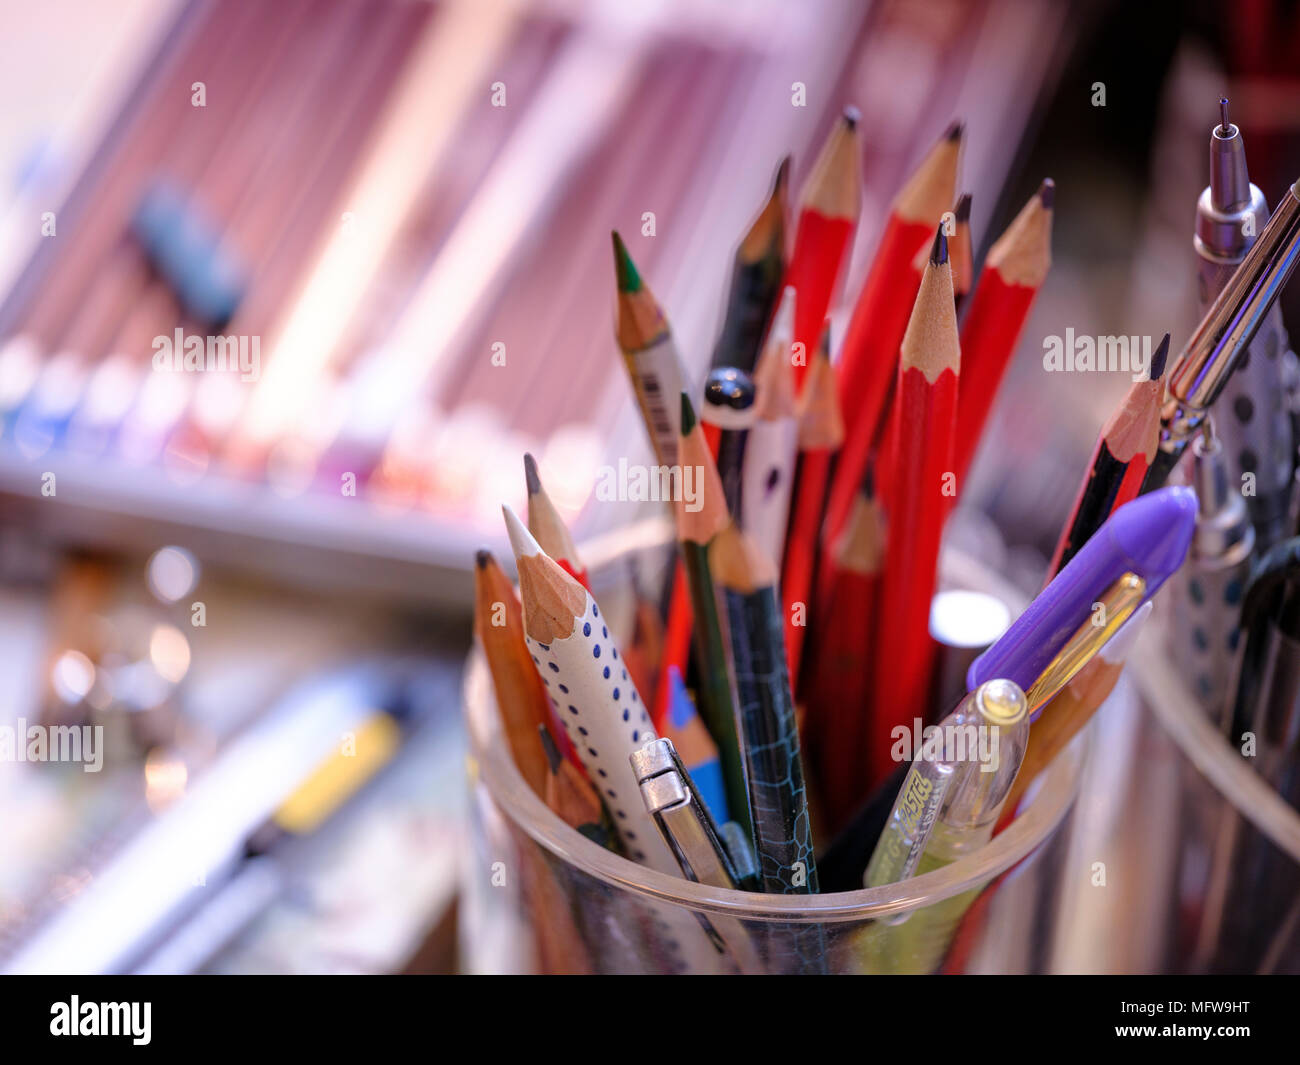 Artist pencils in a jar on a studio desk. Stock Photo